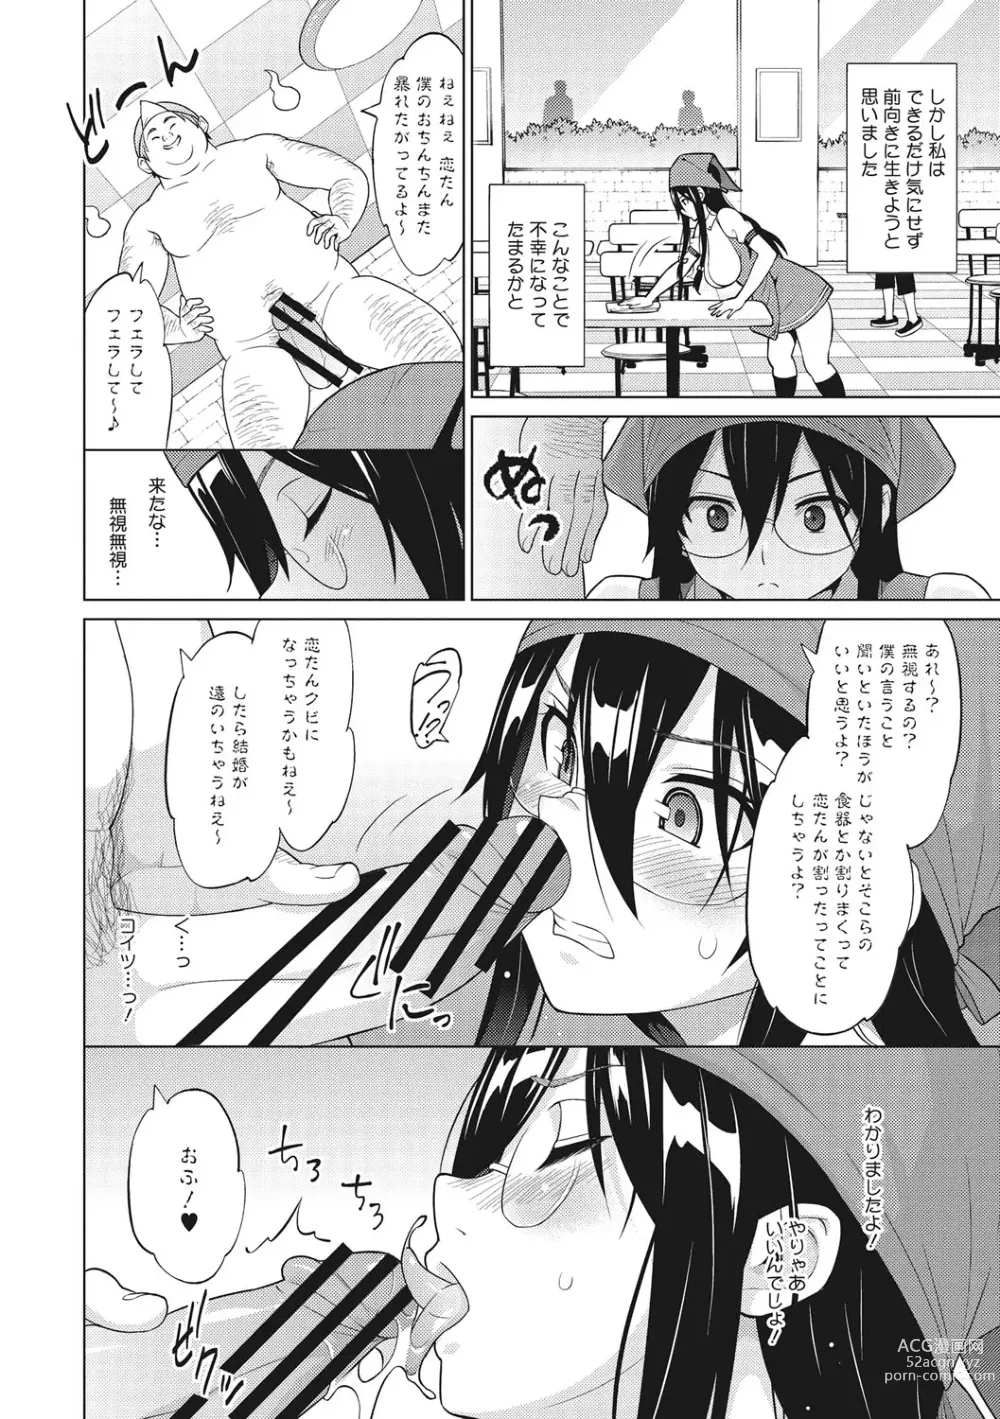 Page 27 of manga Risky Play